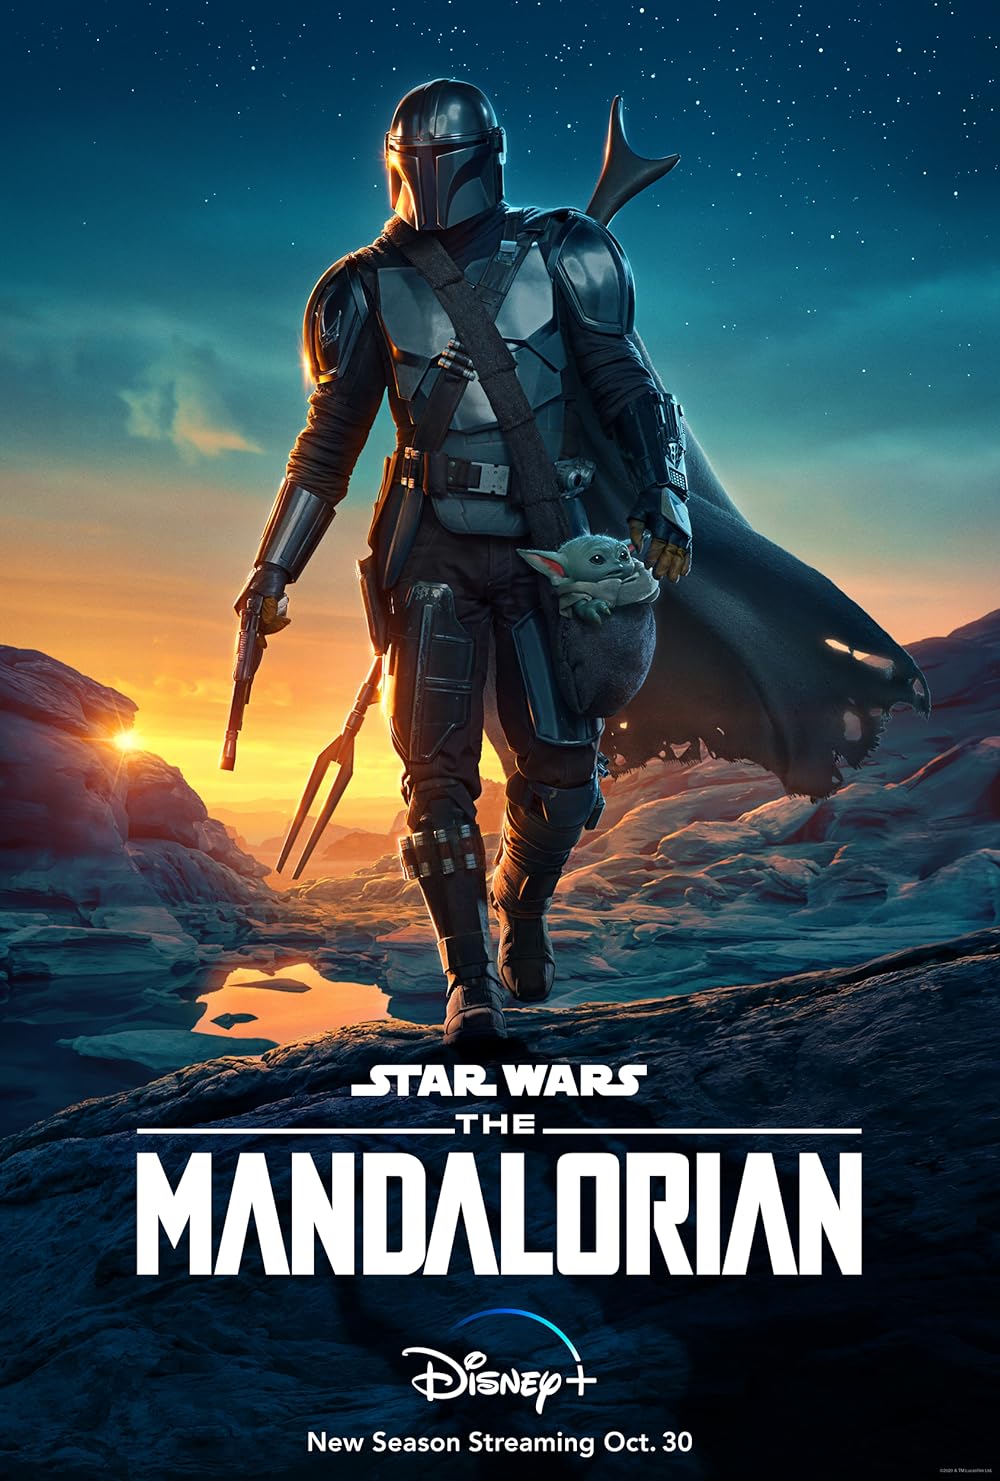 The Mandalorian (2019) S1 EP01&EP08 256Kbps 23.976Fps 48Khz 5.1Ch Disney+ DD+ E-AC3 Turkish Audio TAC